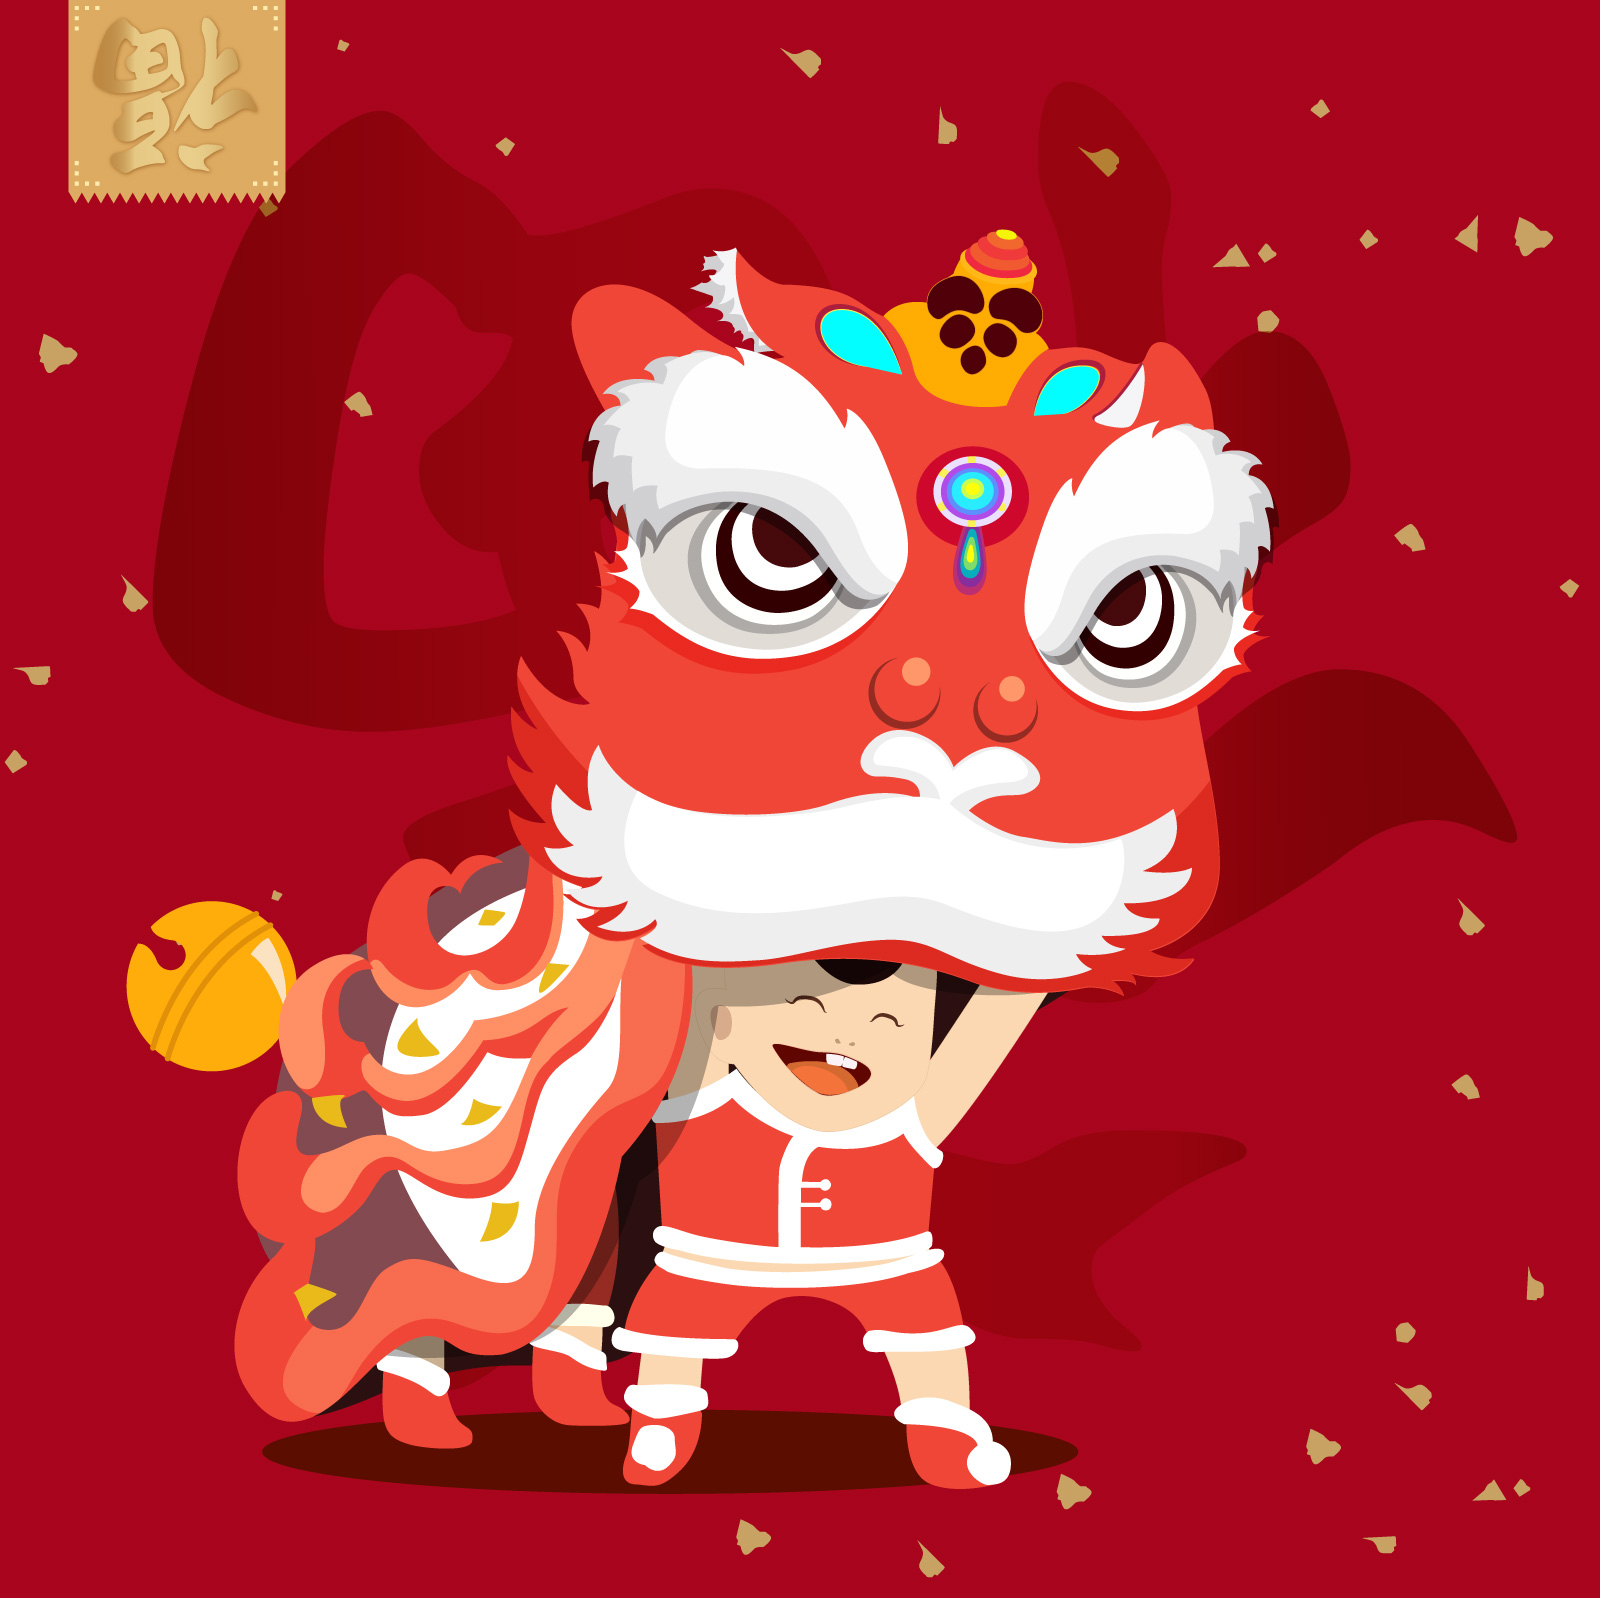 Lovely boy lion dance cartoon image – China Illustrations Vectors AI ESP Free Download #.2